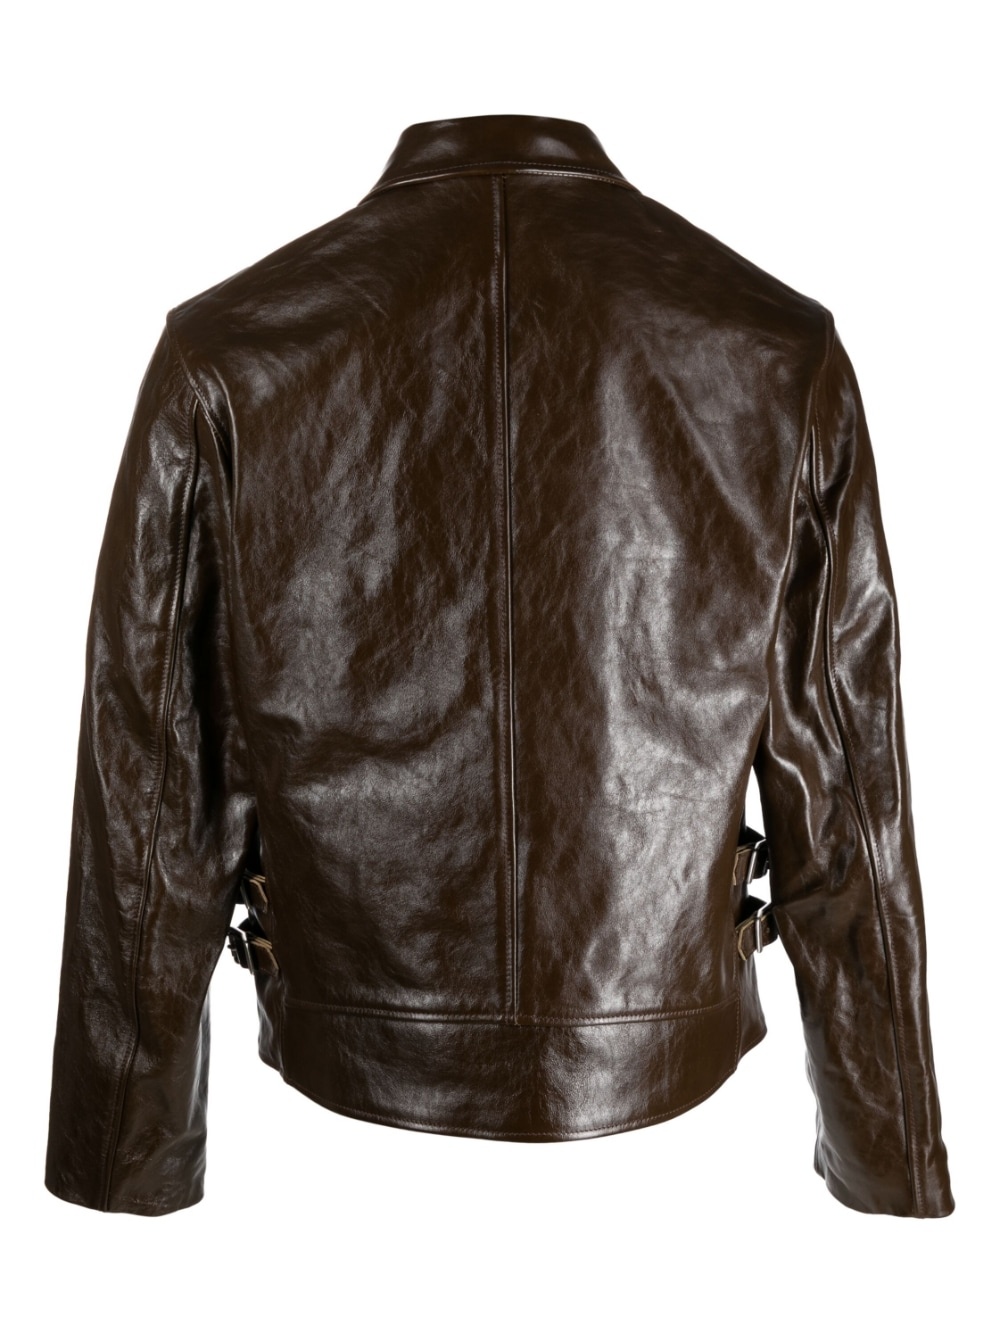 narrow leather jacket - 2